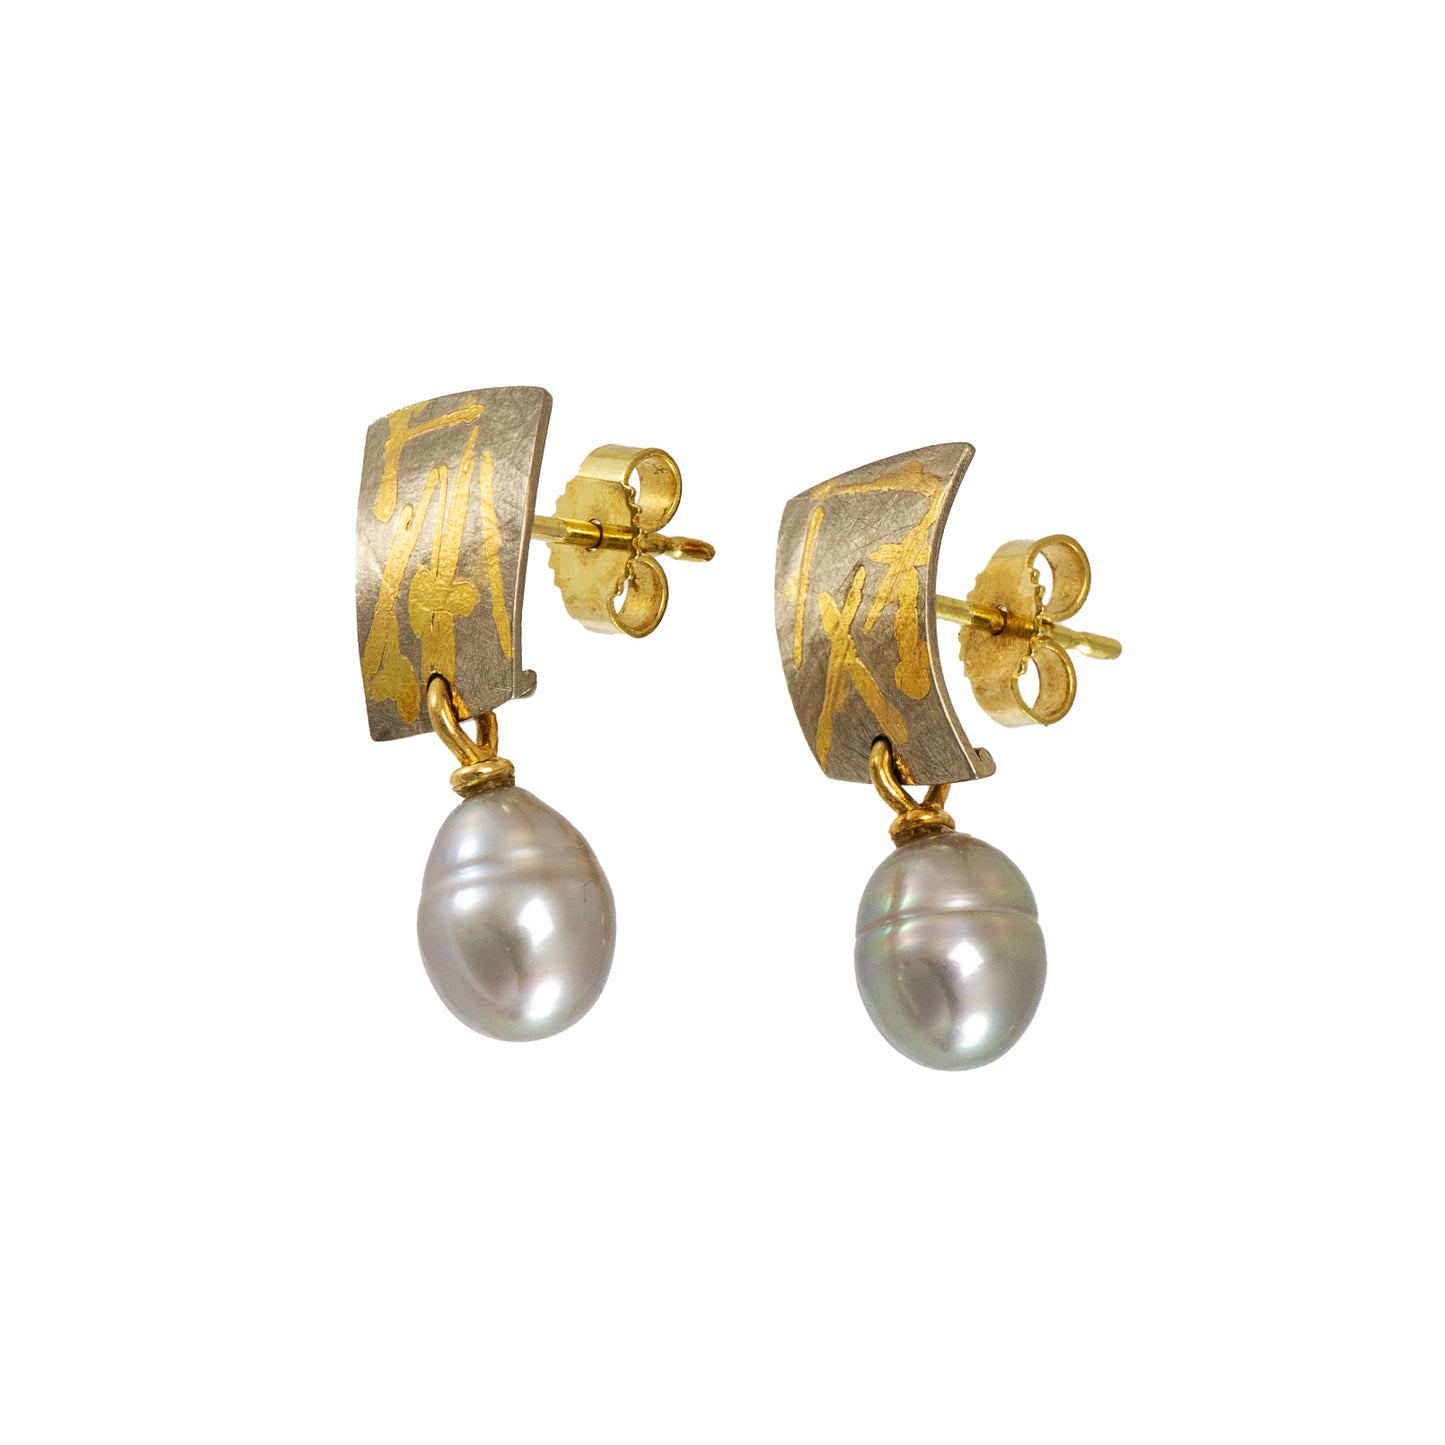 Stud earrings cultured pearl yellow gold white gold 585 14K women's jewelry gold earrings 